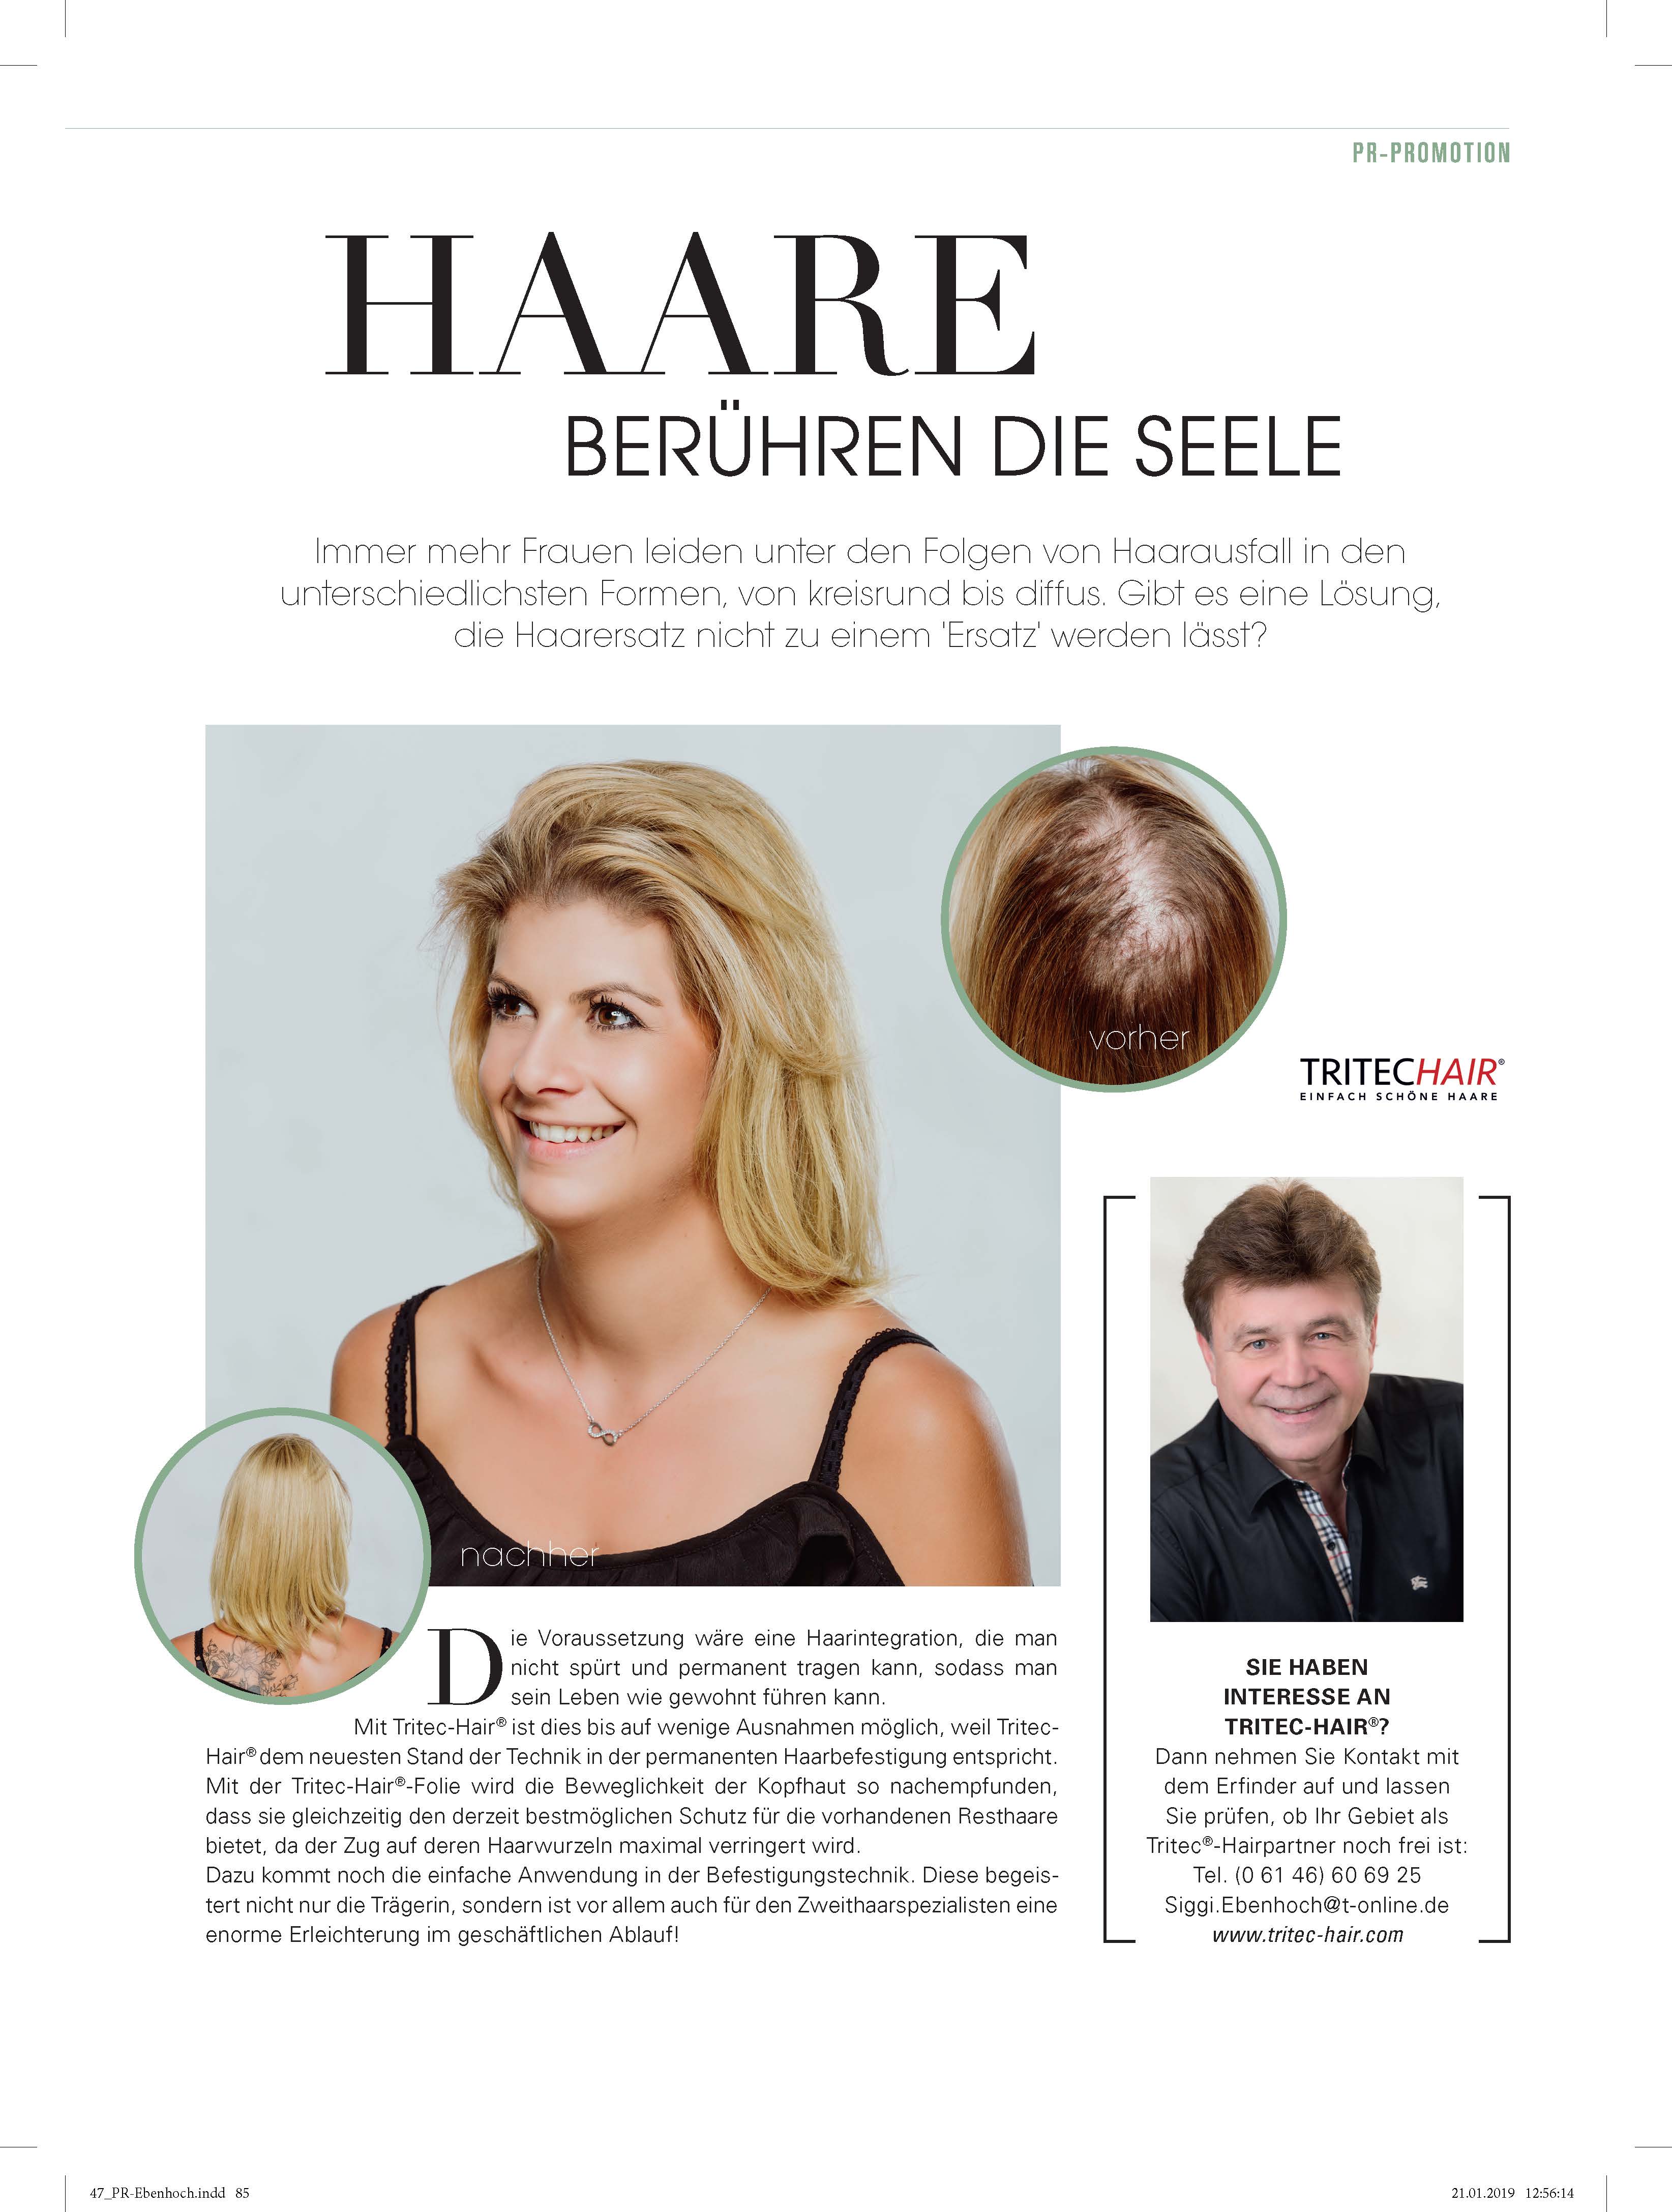 PR Promotion Ueber Tritec Hair